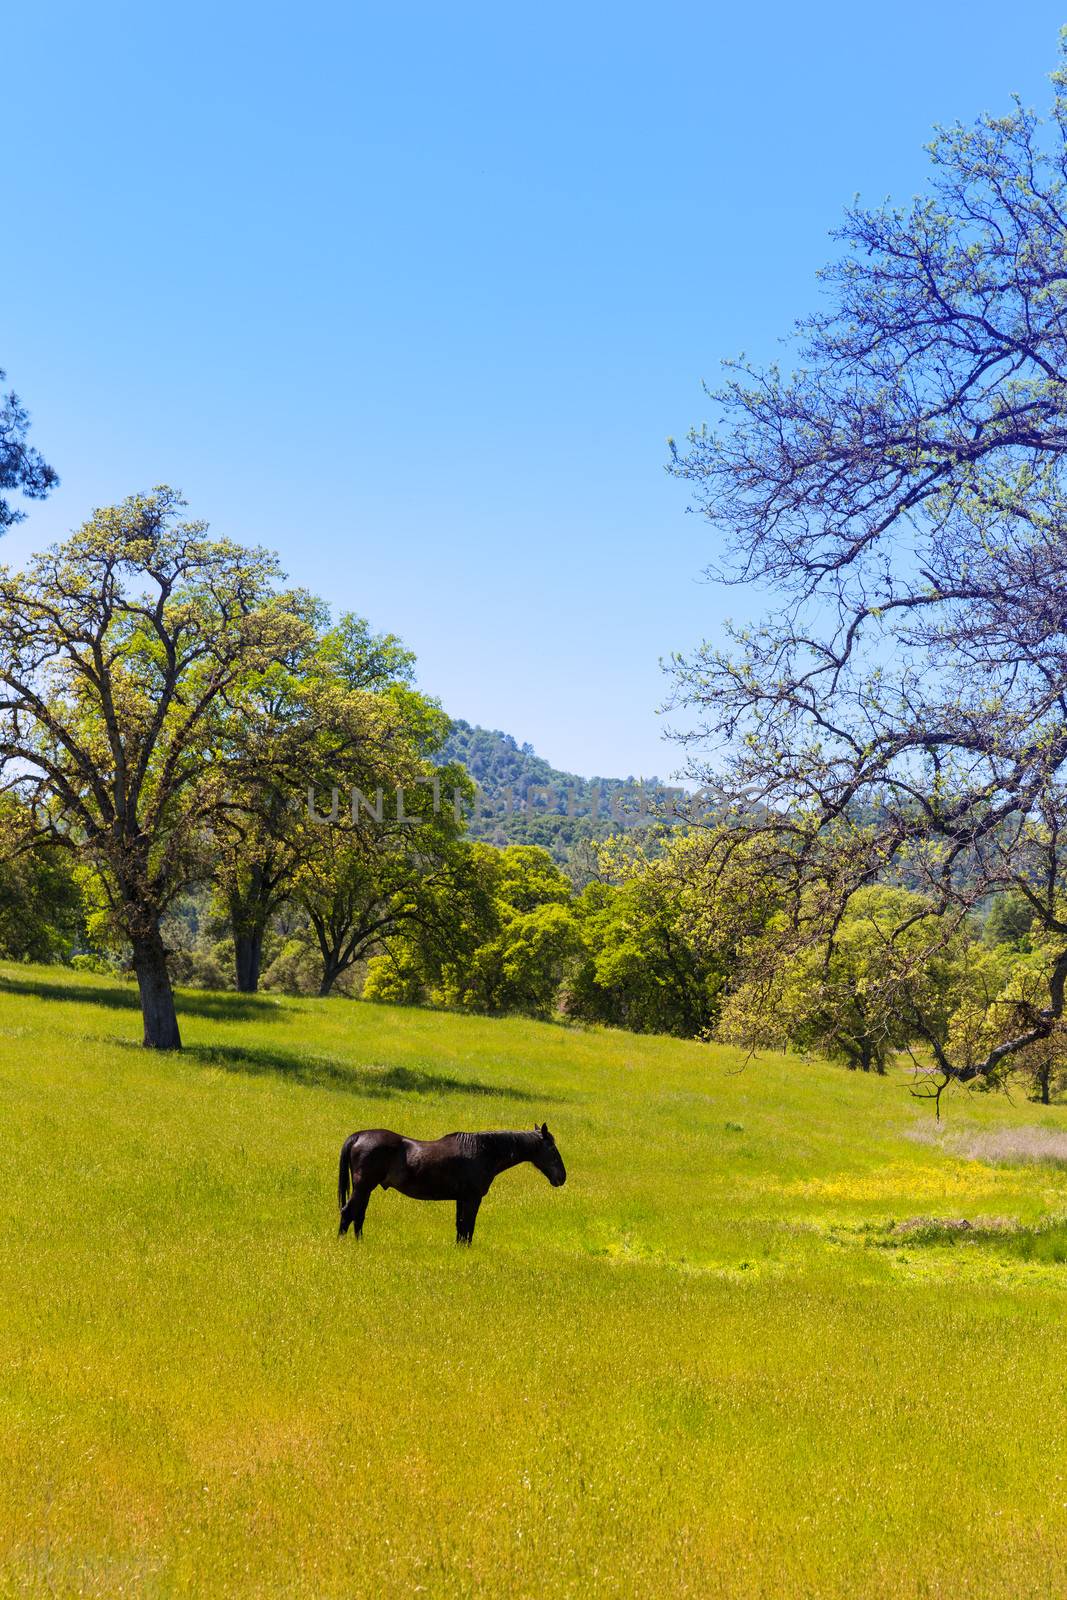 Dark horse in California meadows grasslands by lunamarina